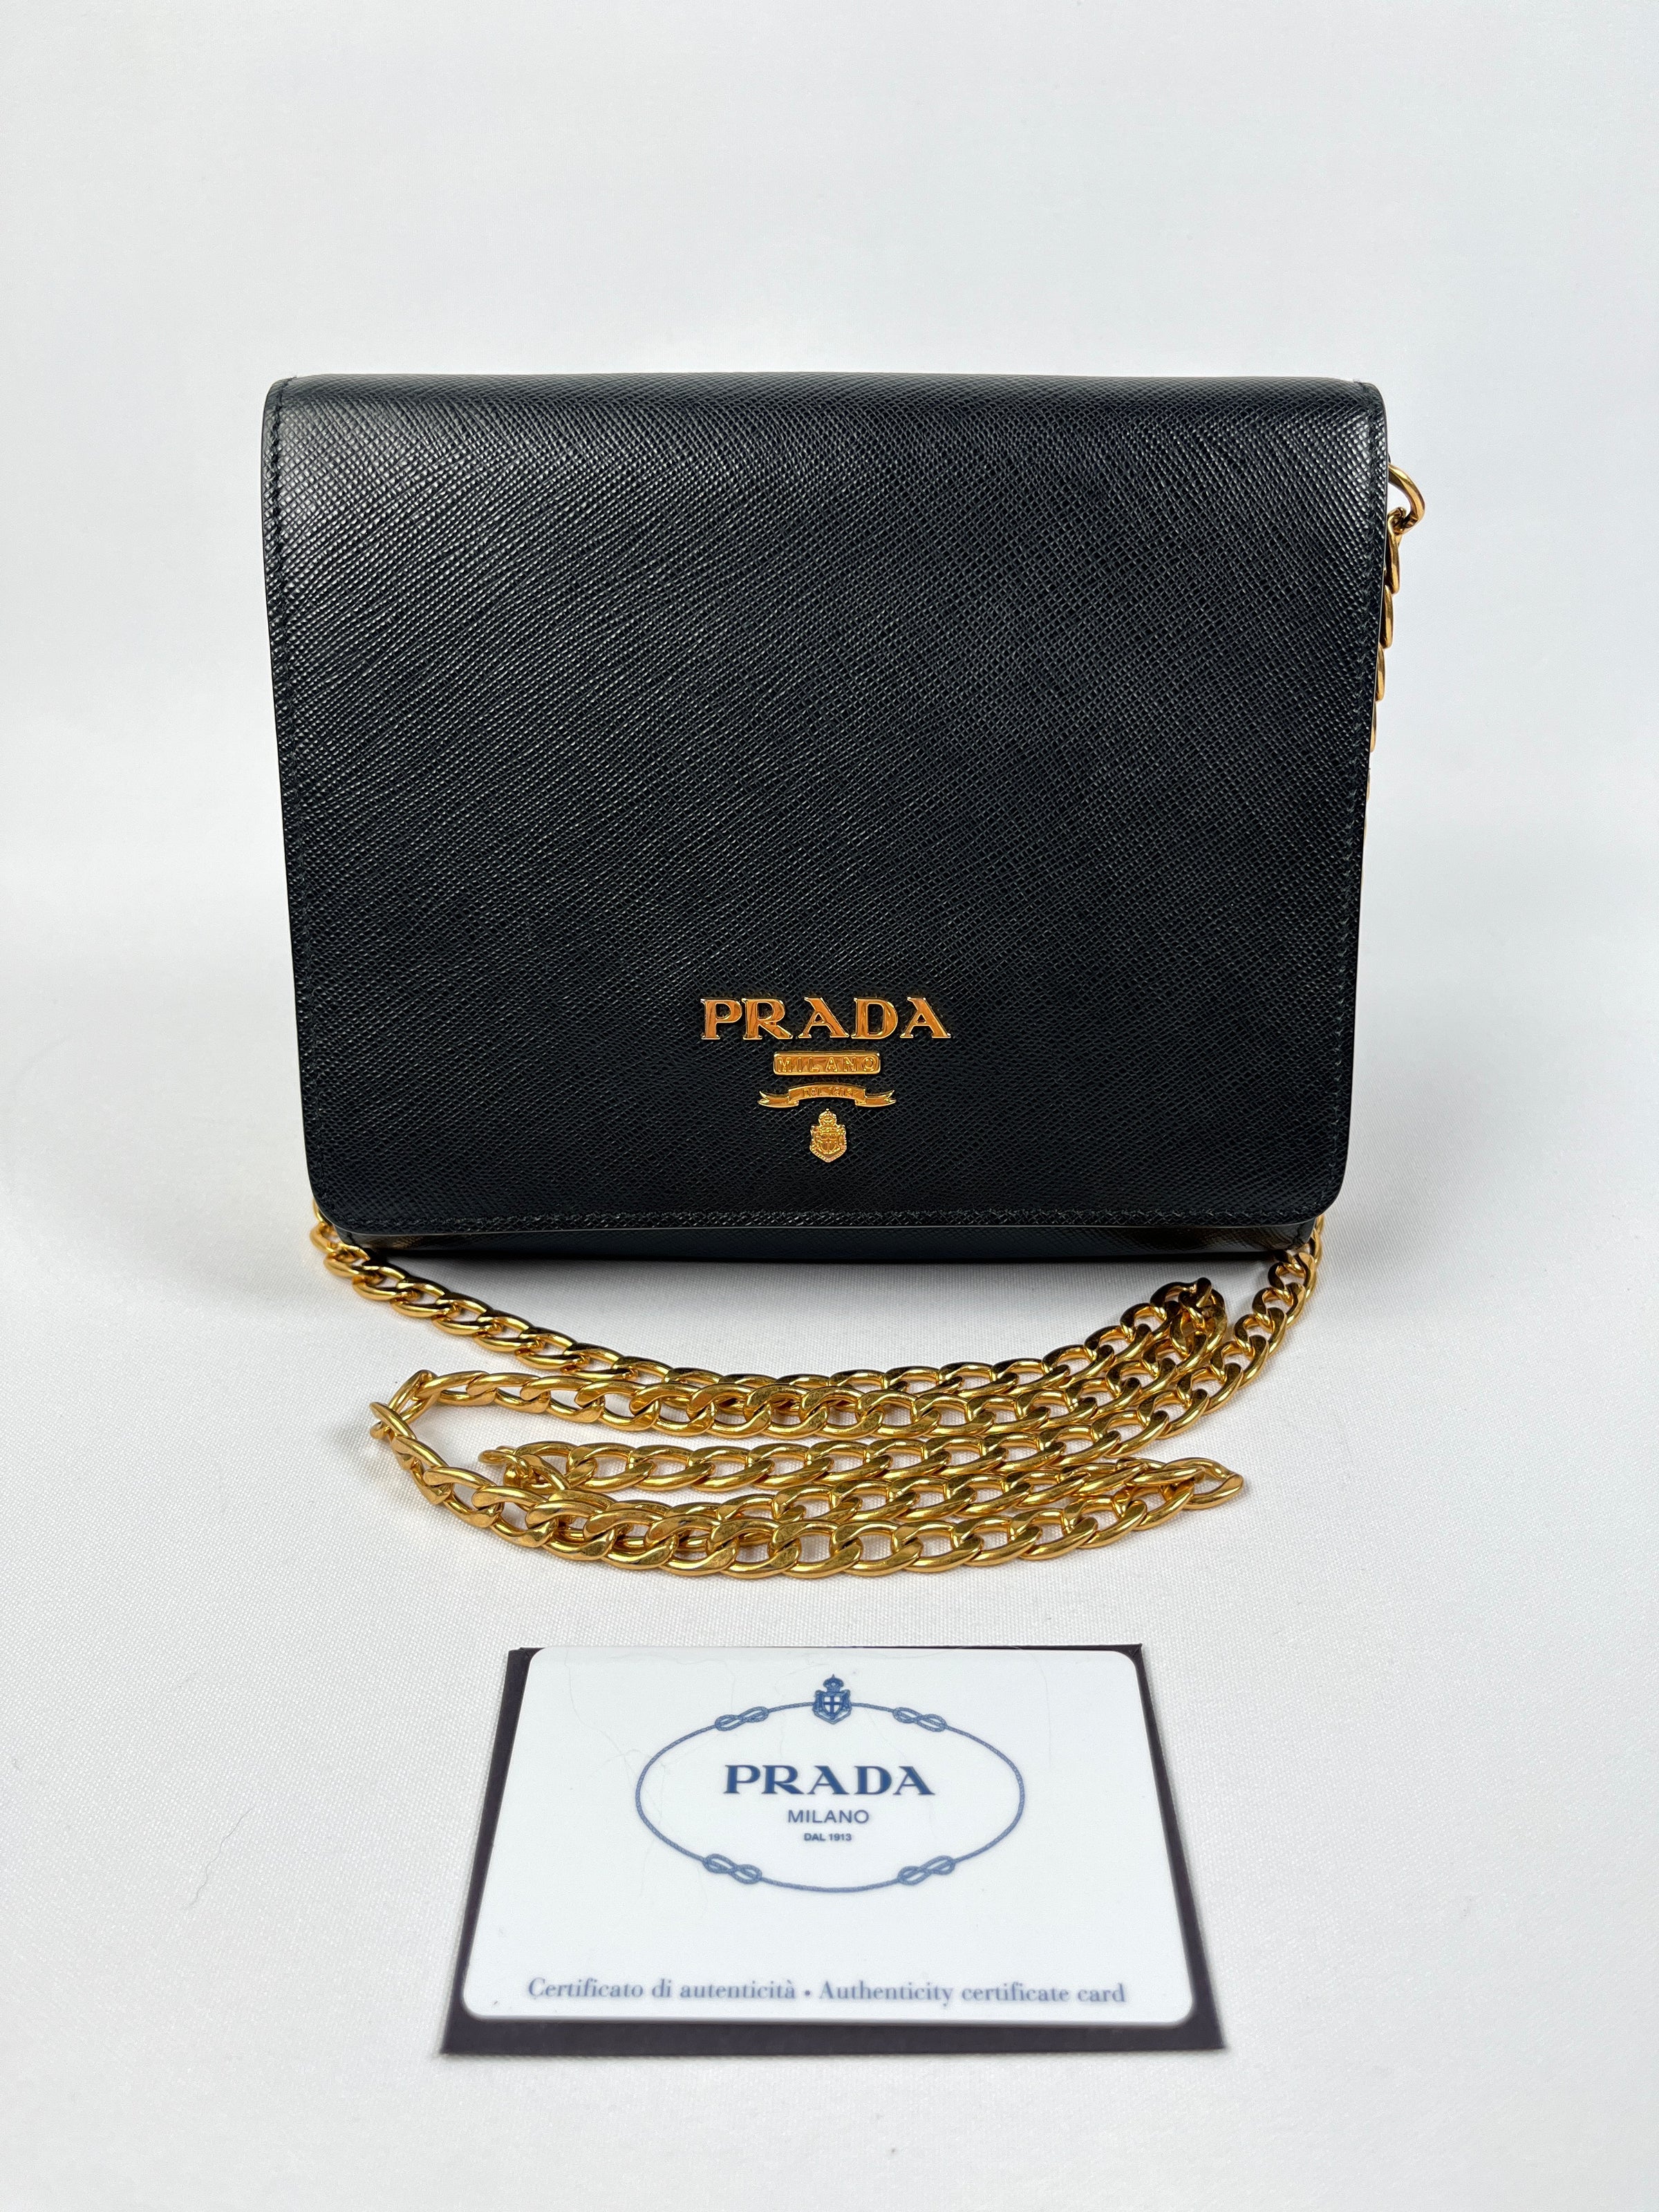 Prada Lux Crossbody Bags for Women